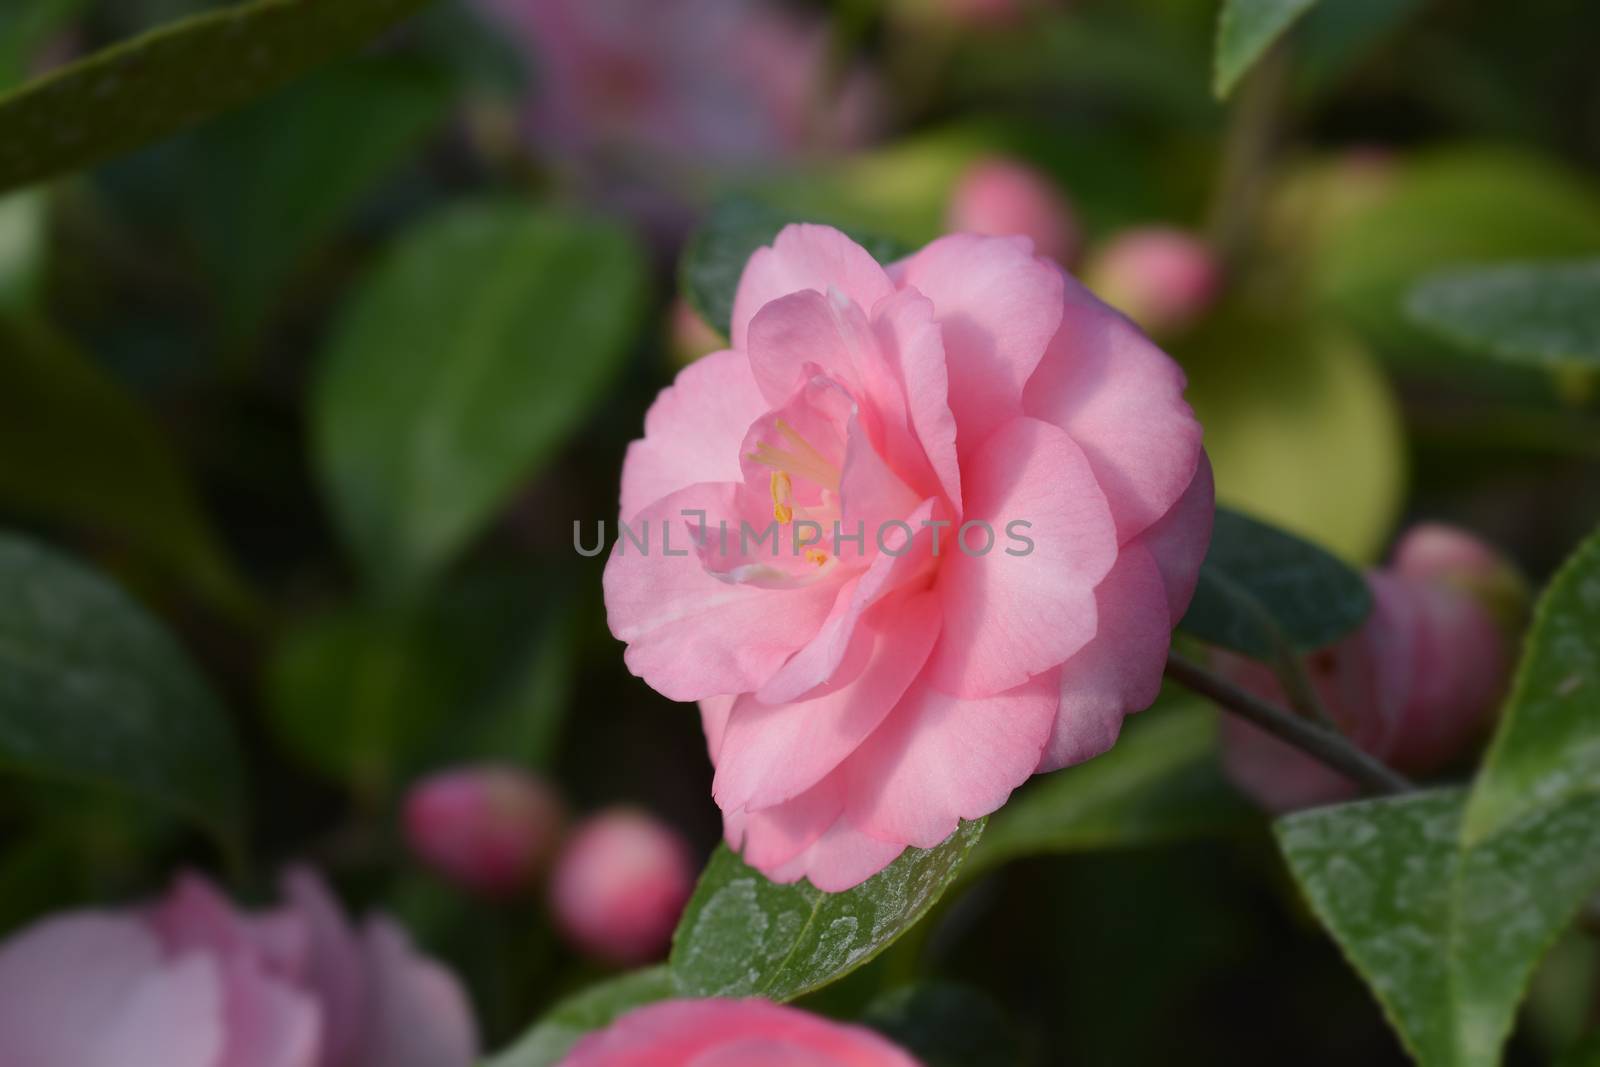 Camellia Spring Festival - Latin name - Camellia x williamsii Spring Festival